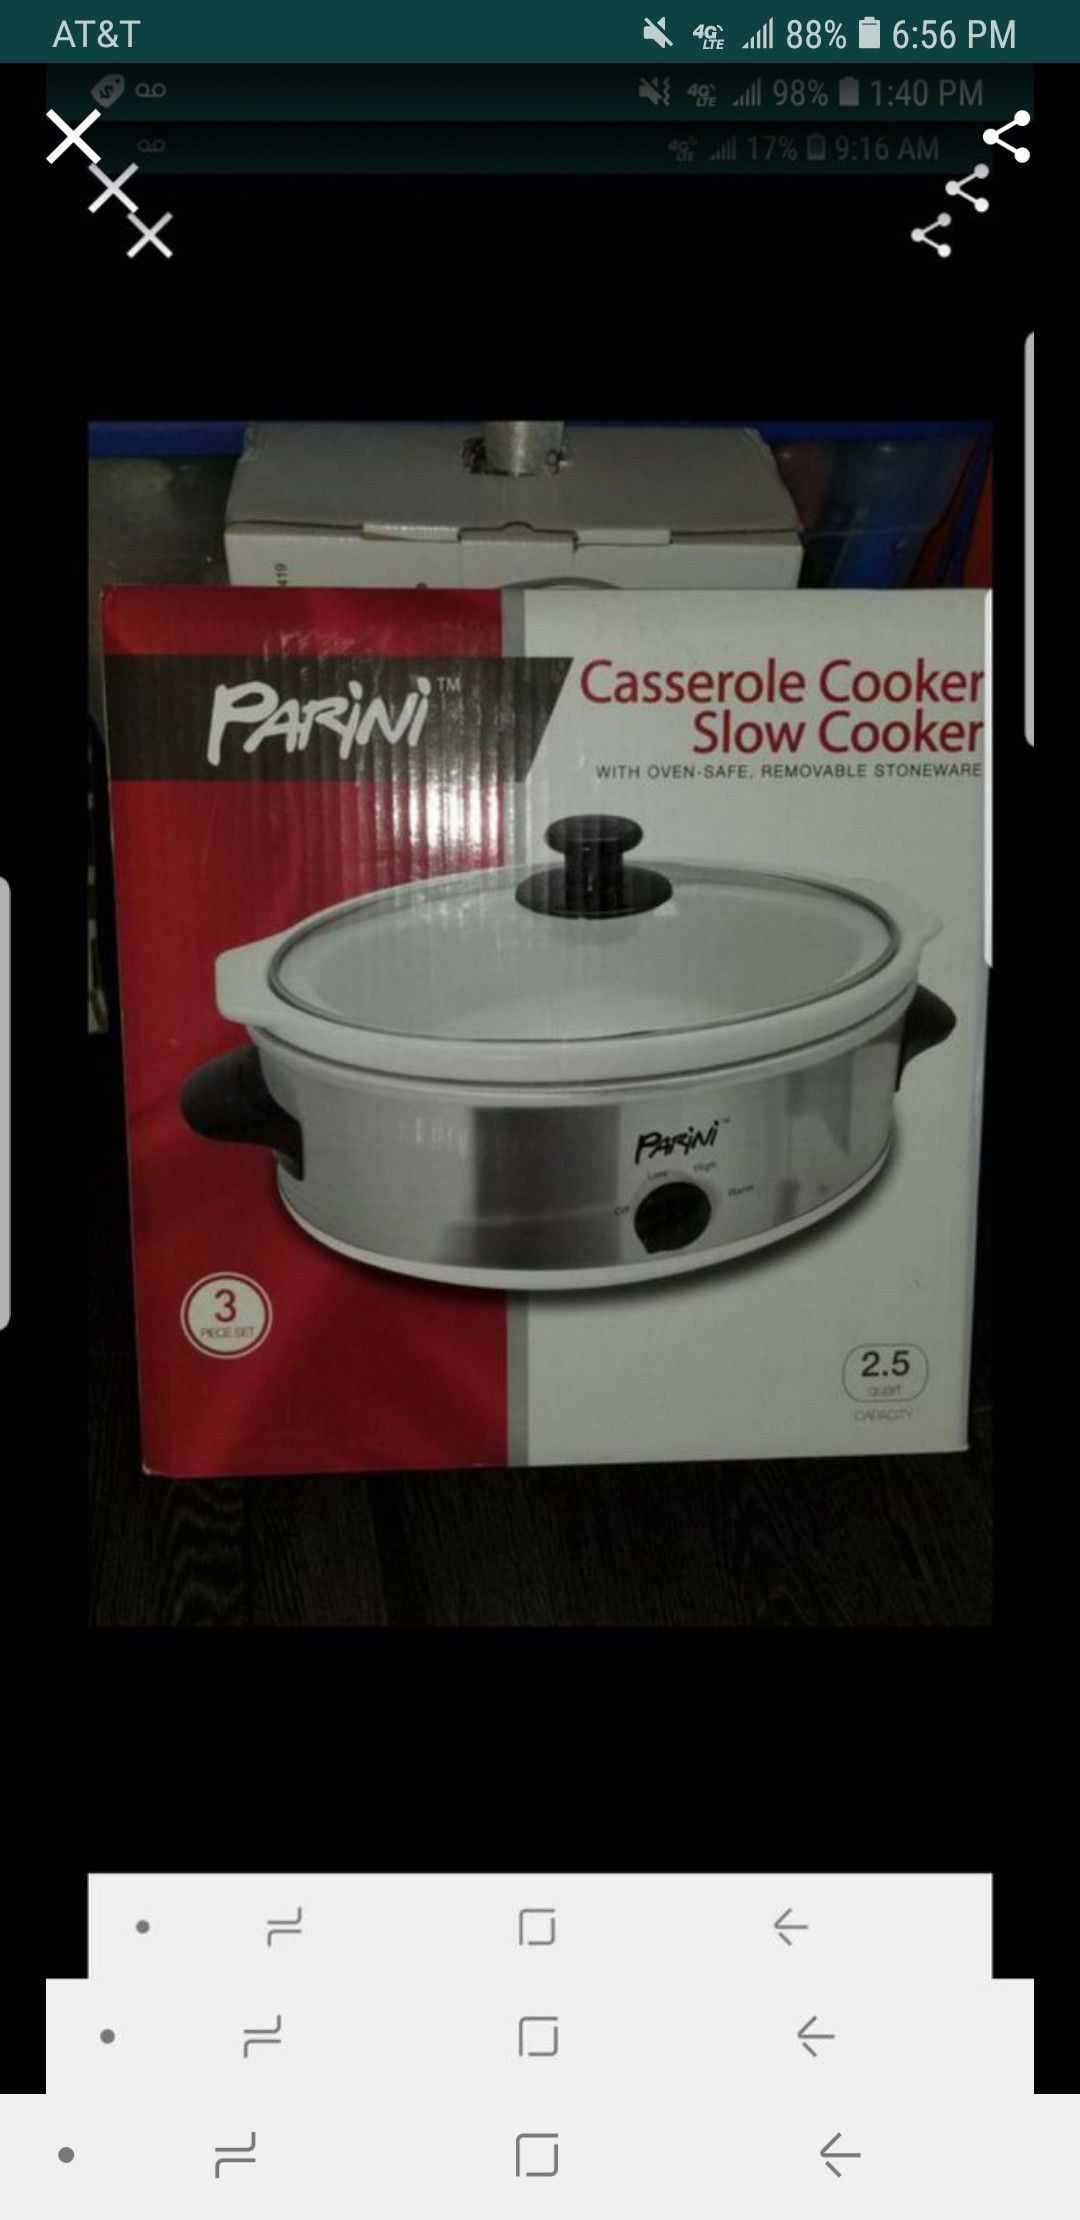 Slow cooker/casserole cooker